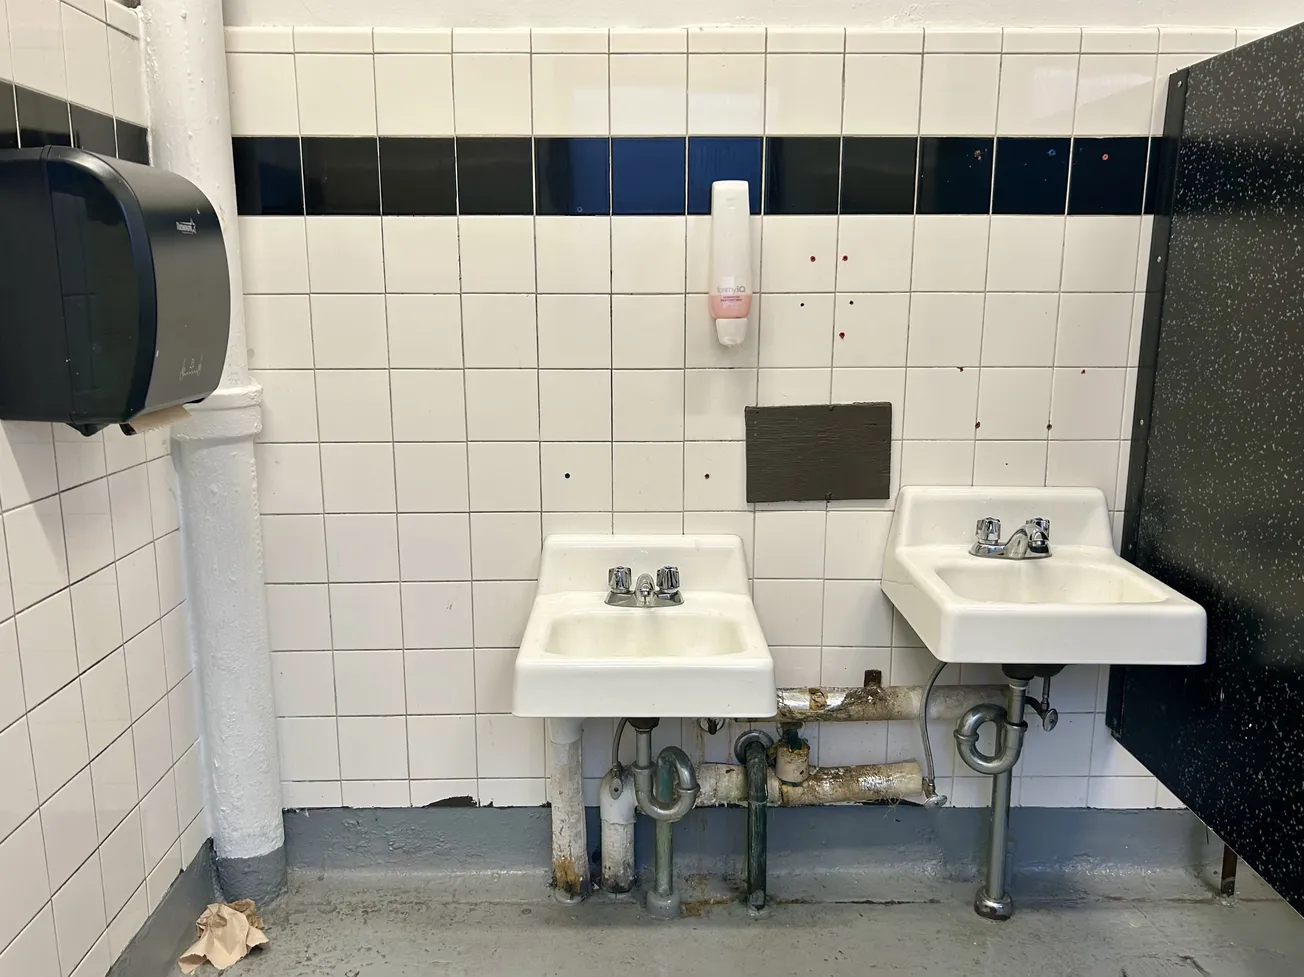 Racist graffiti found in Philadelphia Catholic school bathroom, police investigating